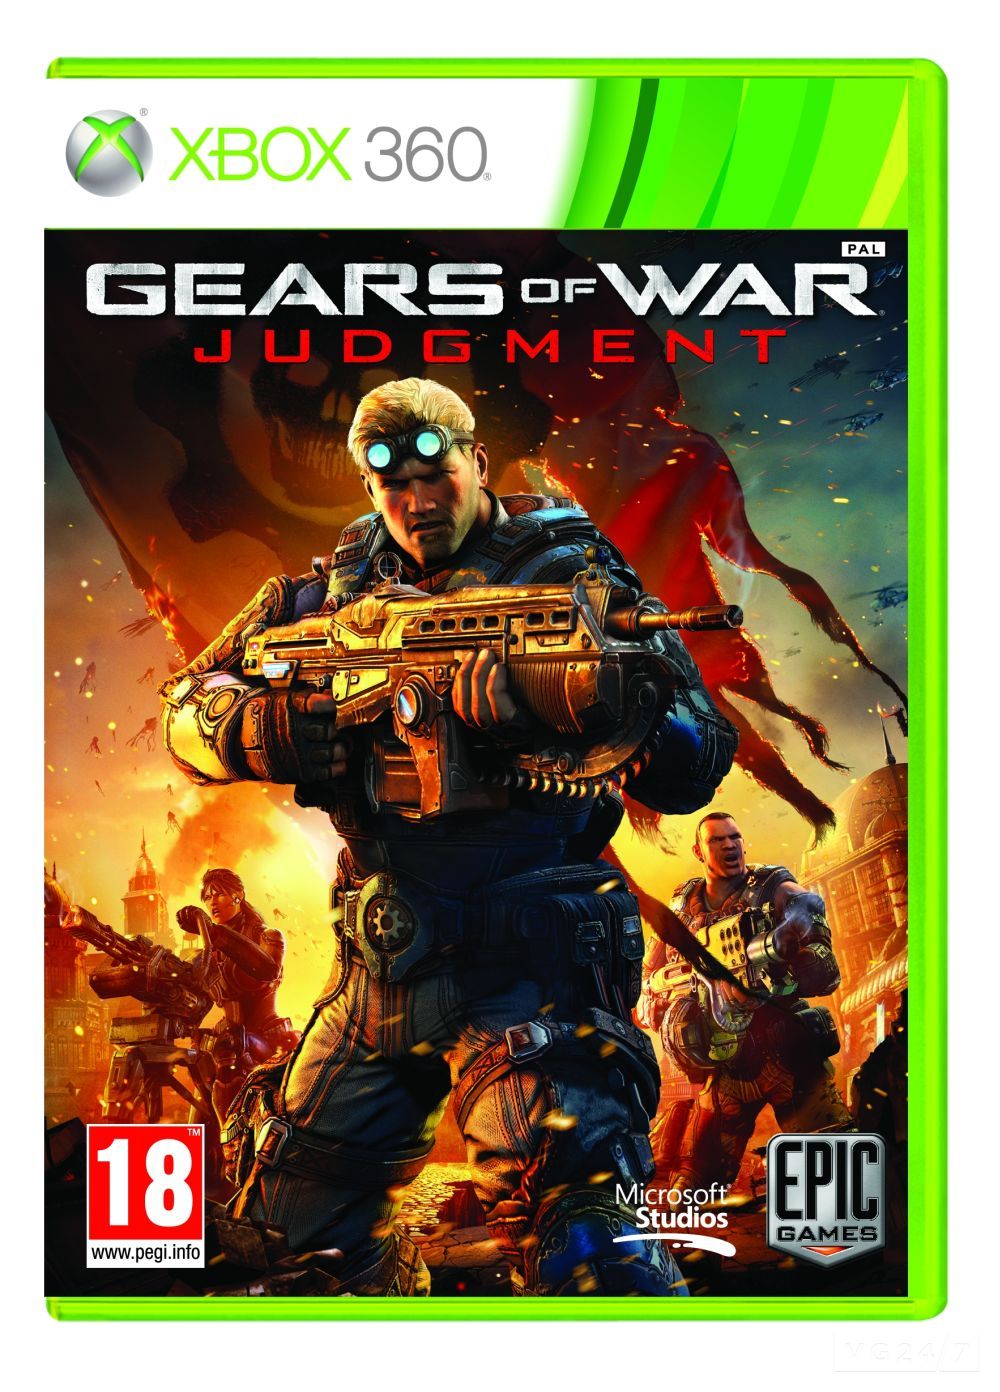 Gears-of-War-Judgment-Gets-Official-Cover-Art-2.jpg